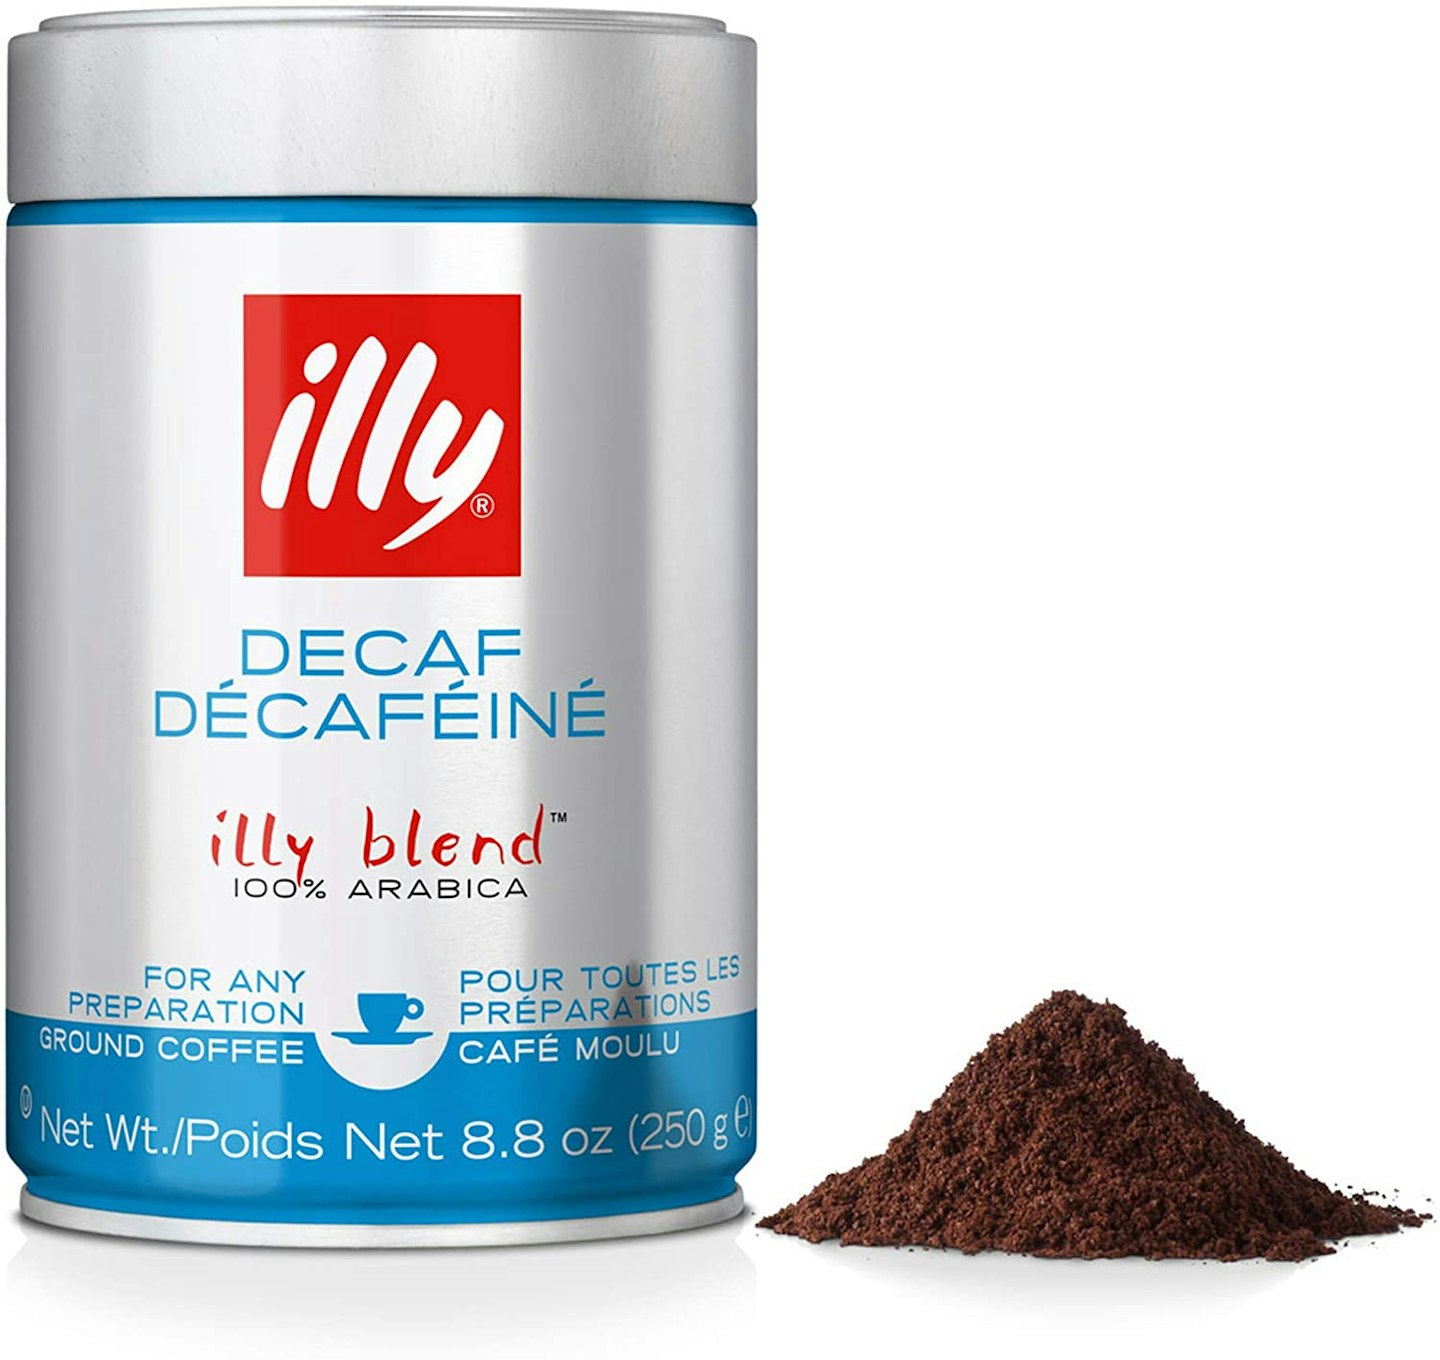 illy Coffee, Decaffeinated